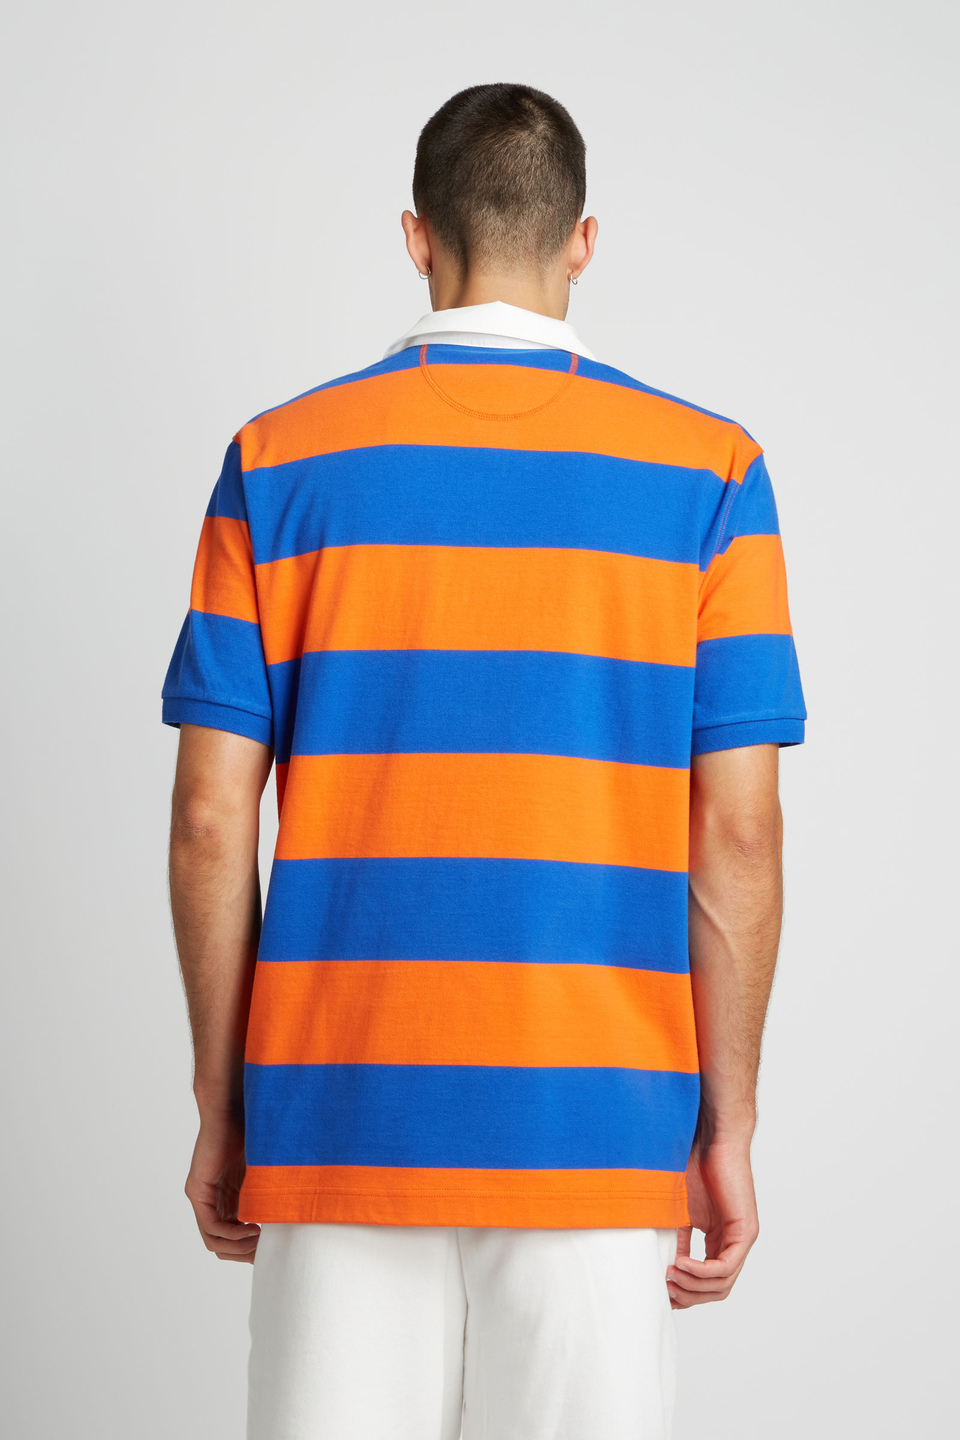 Herren-Poloshirt aus Piqué mit kurzem Arm, oversized Modell | La Martina - Official Online Shop